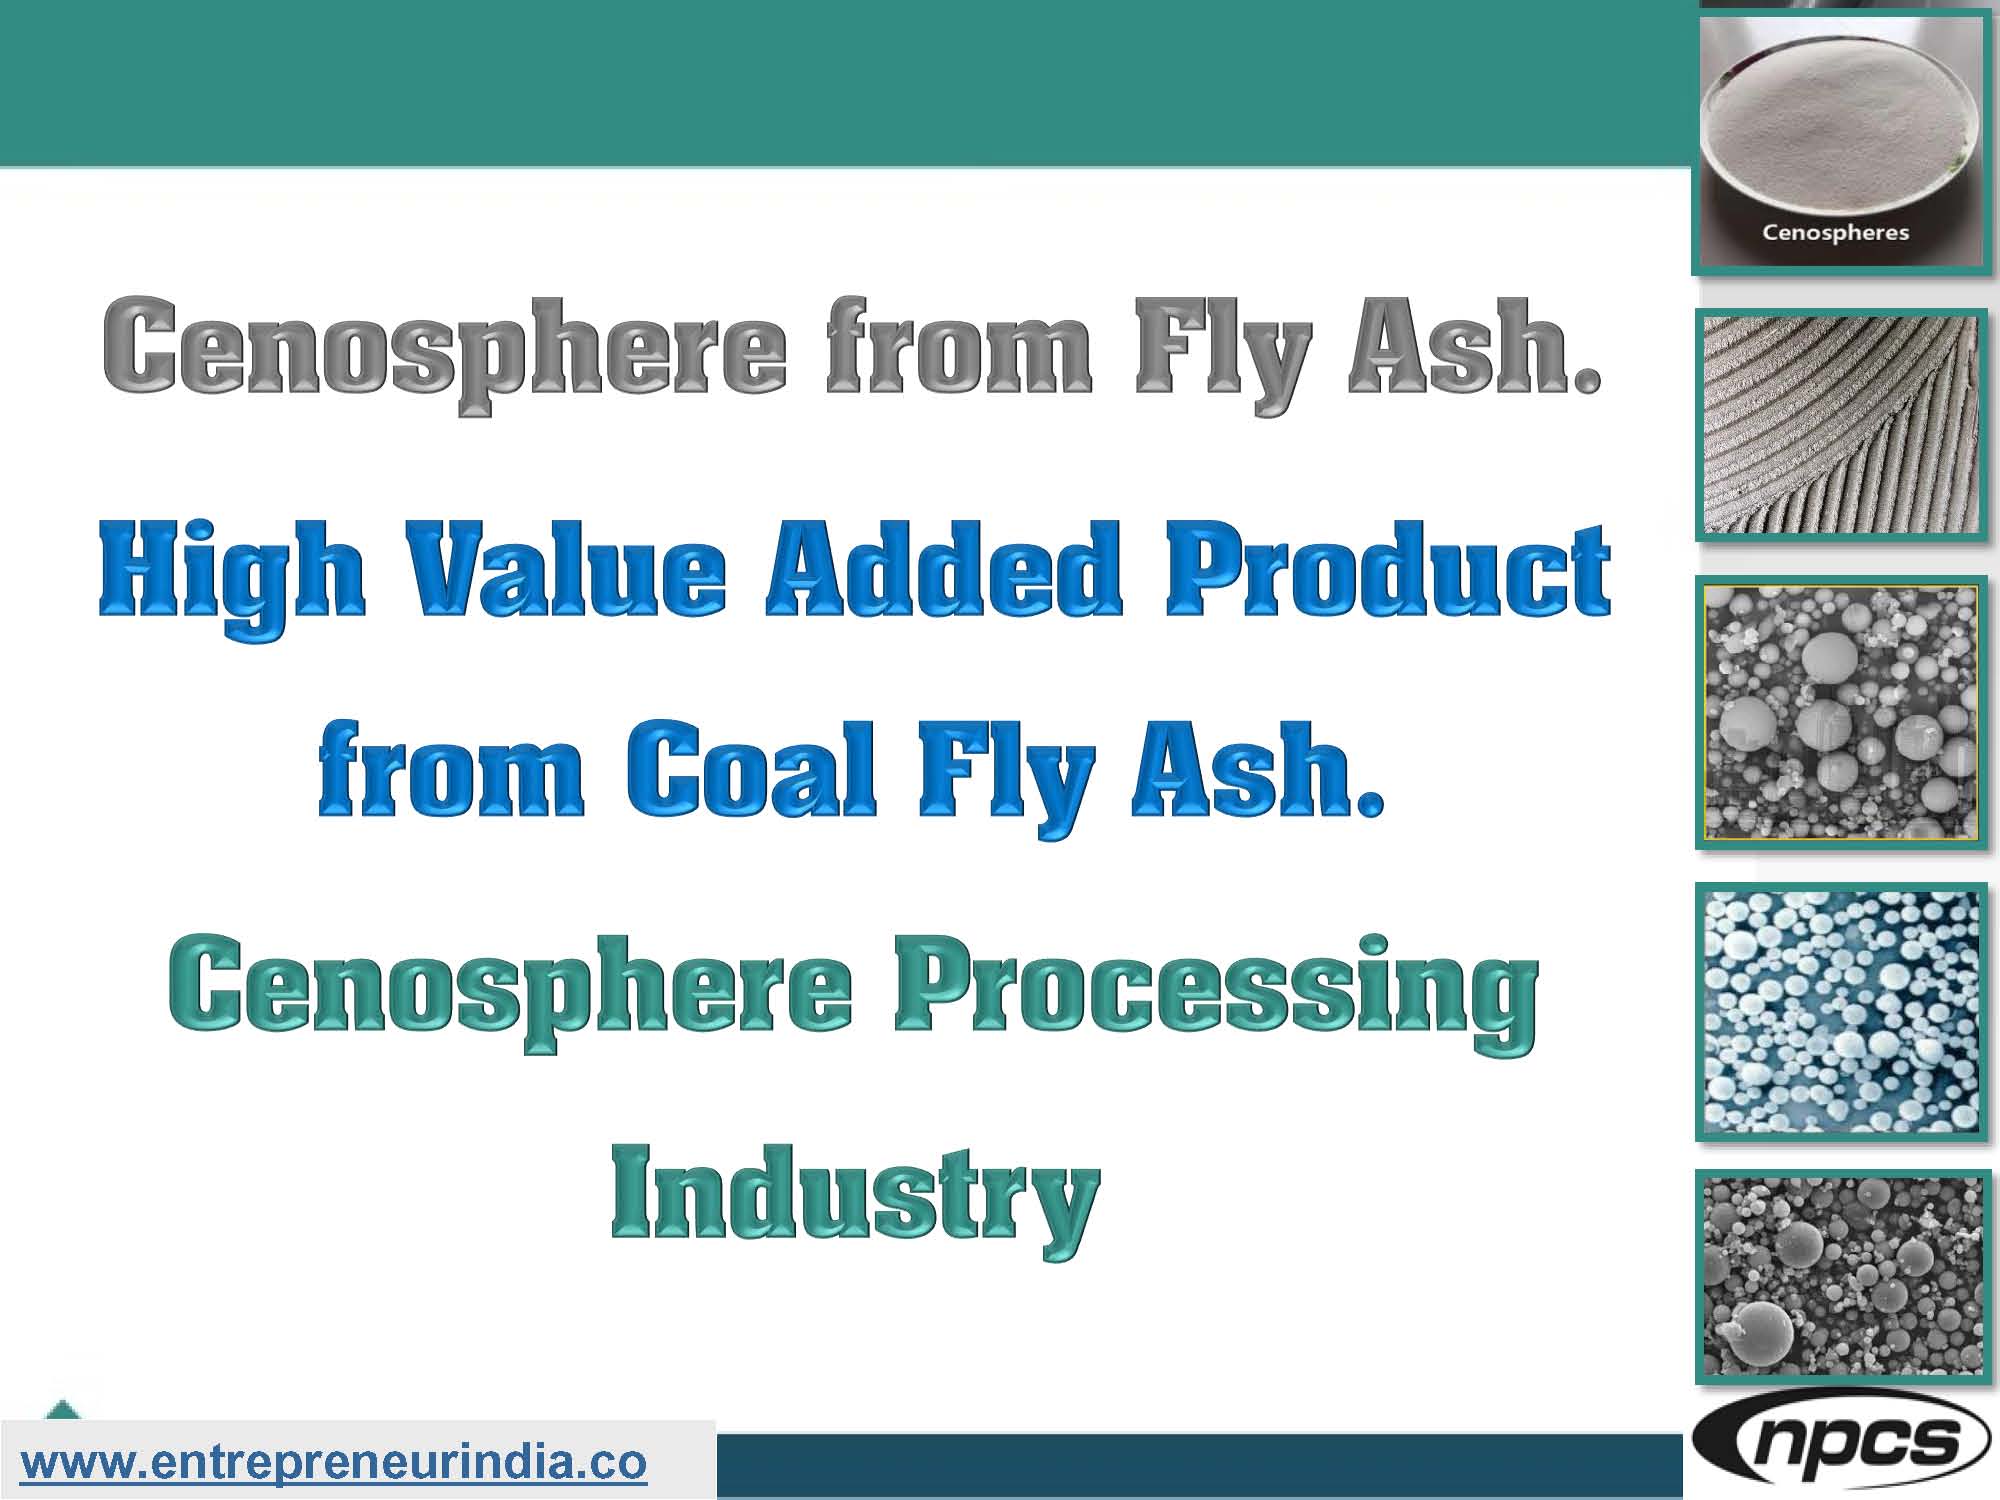 Cenosphere from Fly Ash